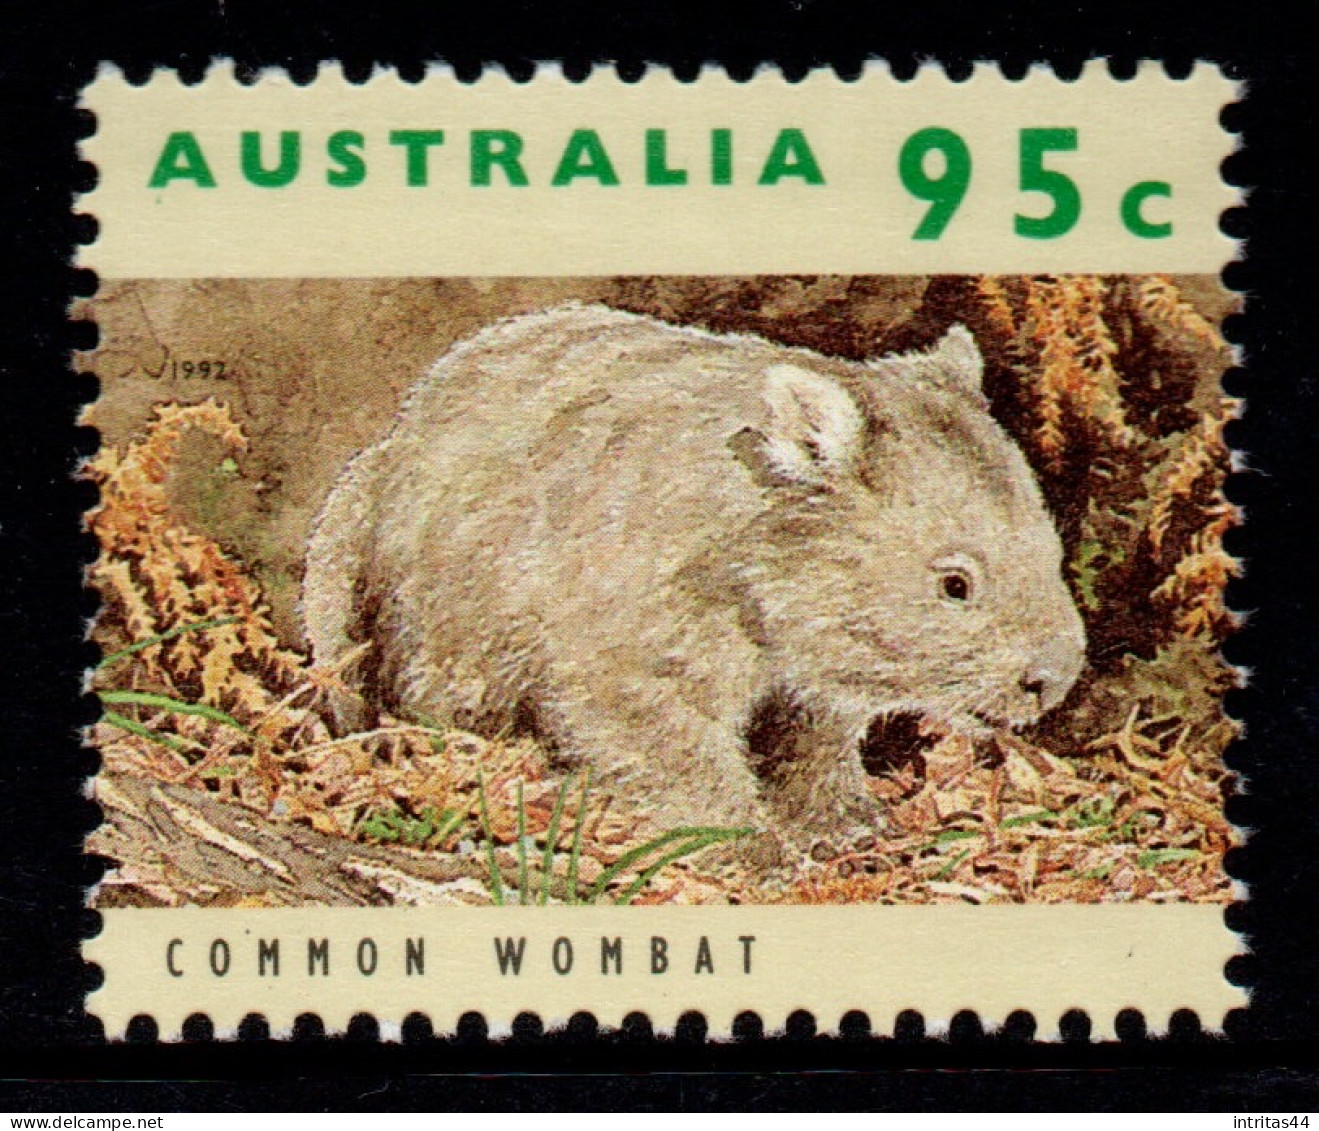 AUSTRALIA 1993  AUSTRALIAN WILDLIFE 95c " COMMON WOMBAT " STAMP MNH - Nuovi